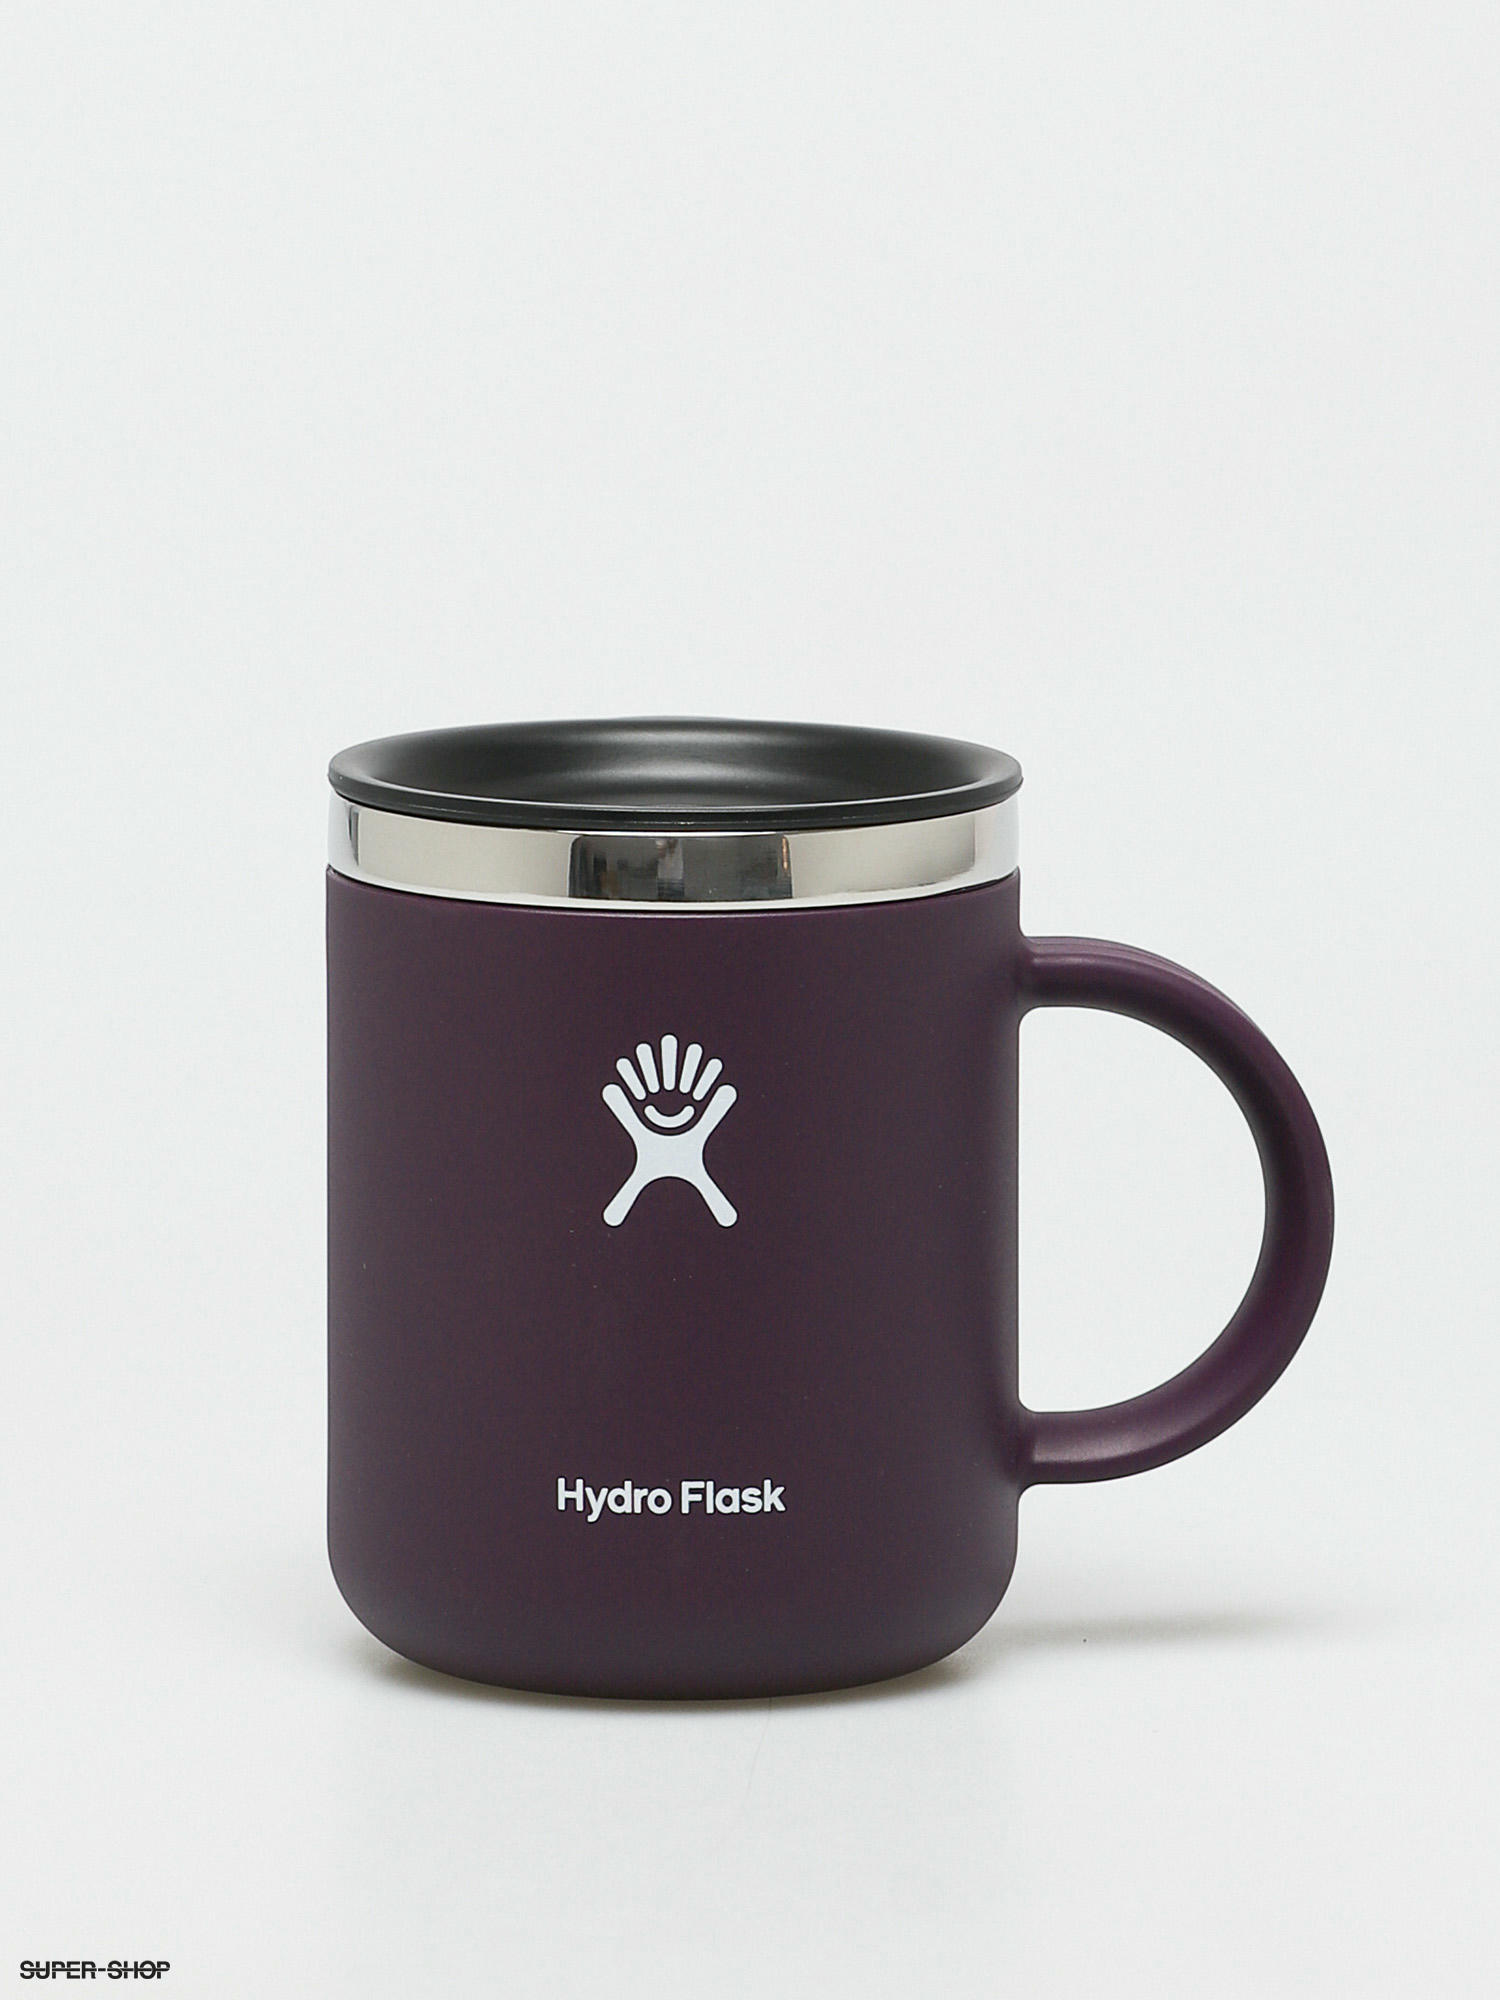 https://static.super-shop.com/1267094-hydro-flask-coffe-mug-354ml-cup-eggplant.jpg?w=1920